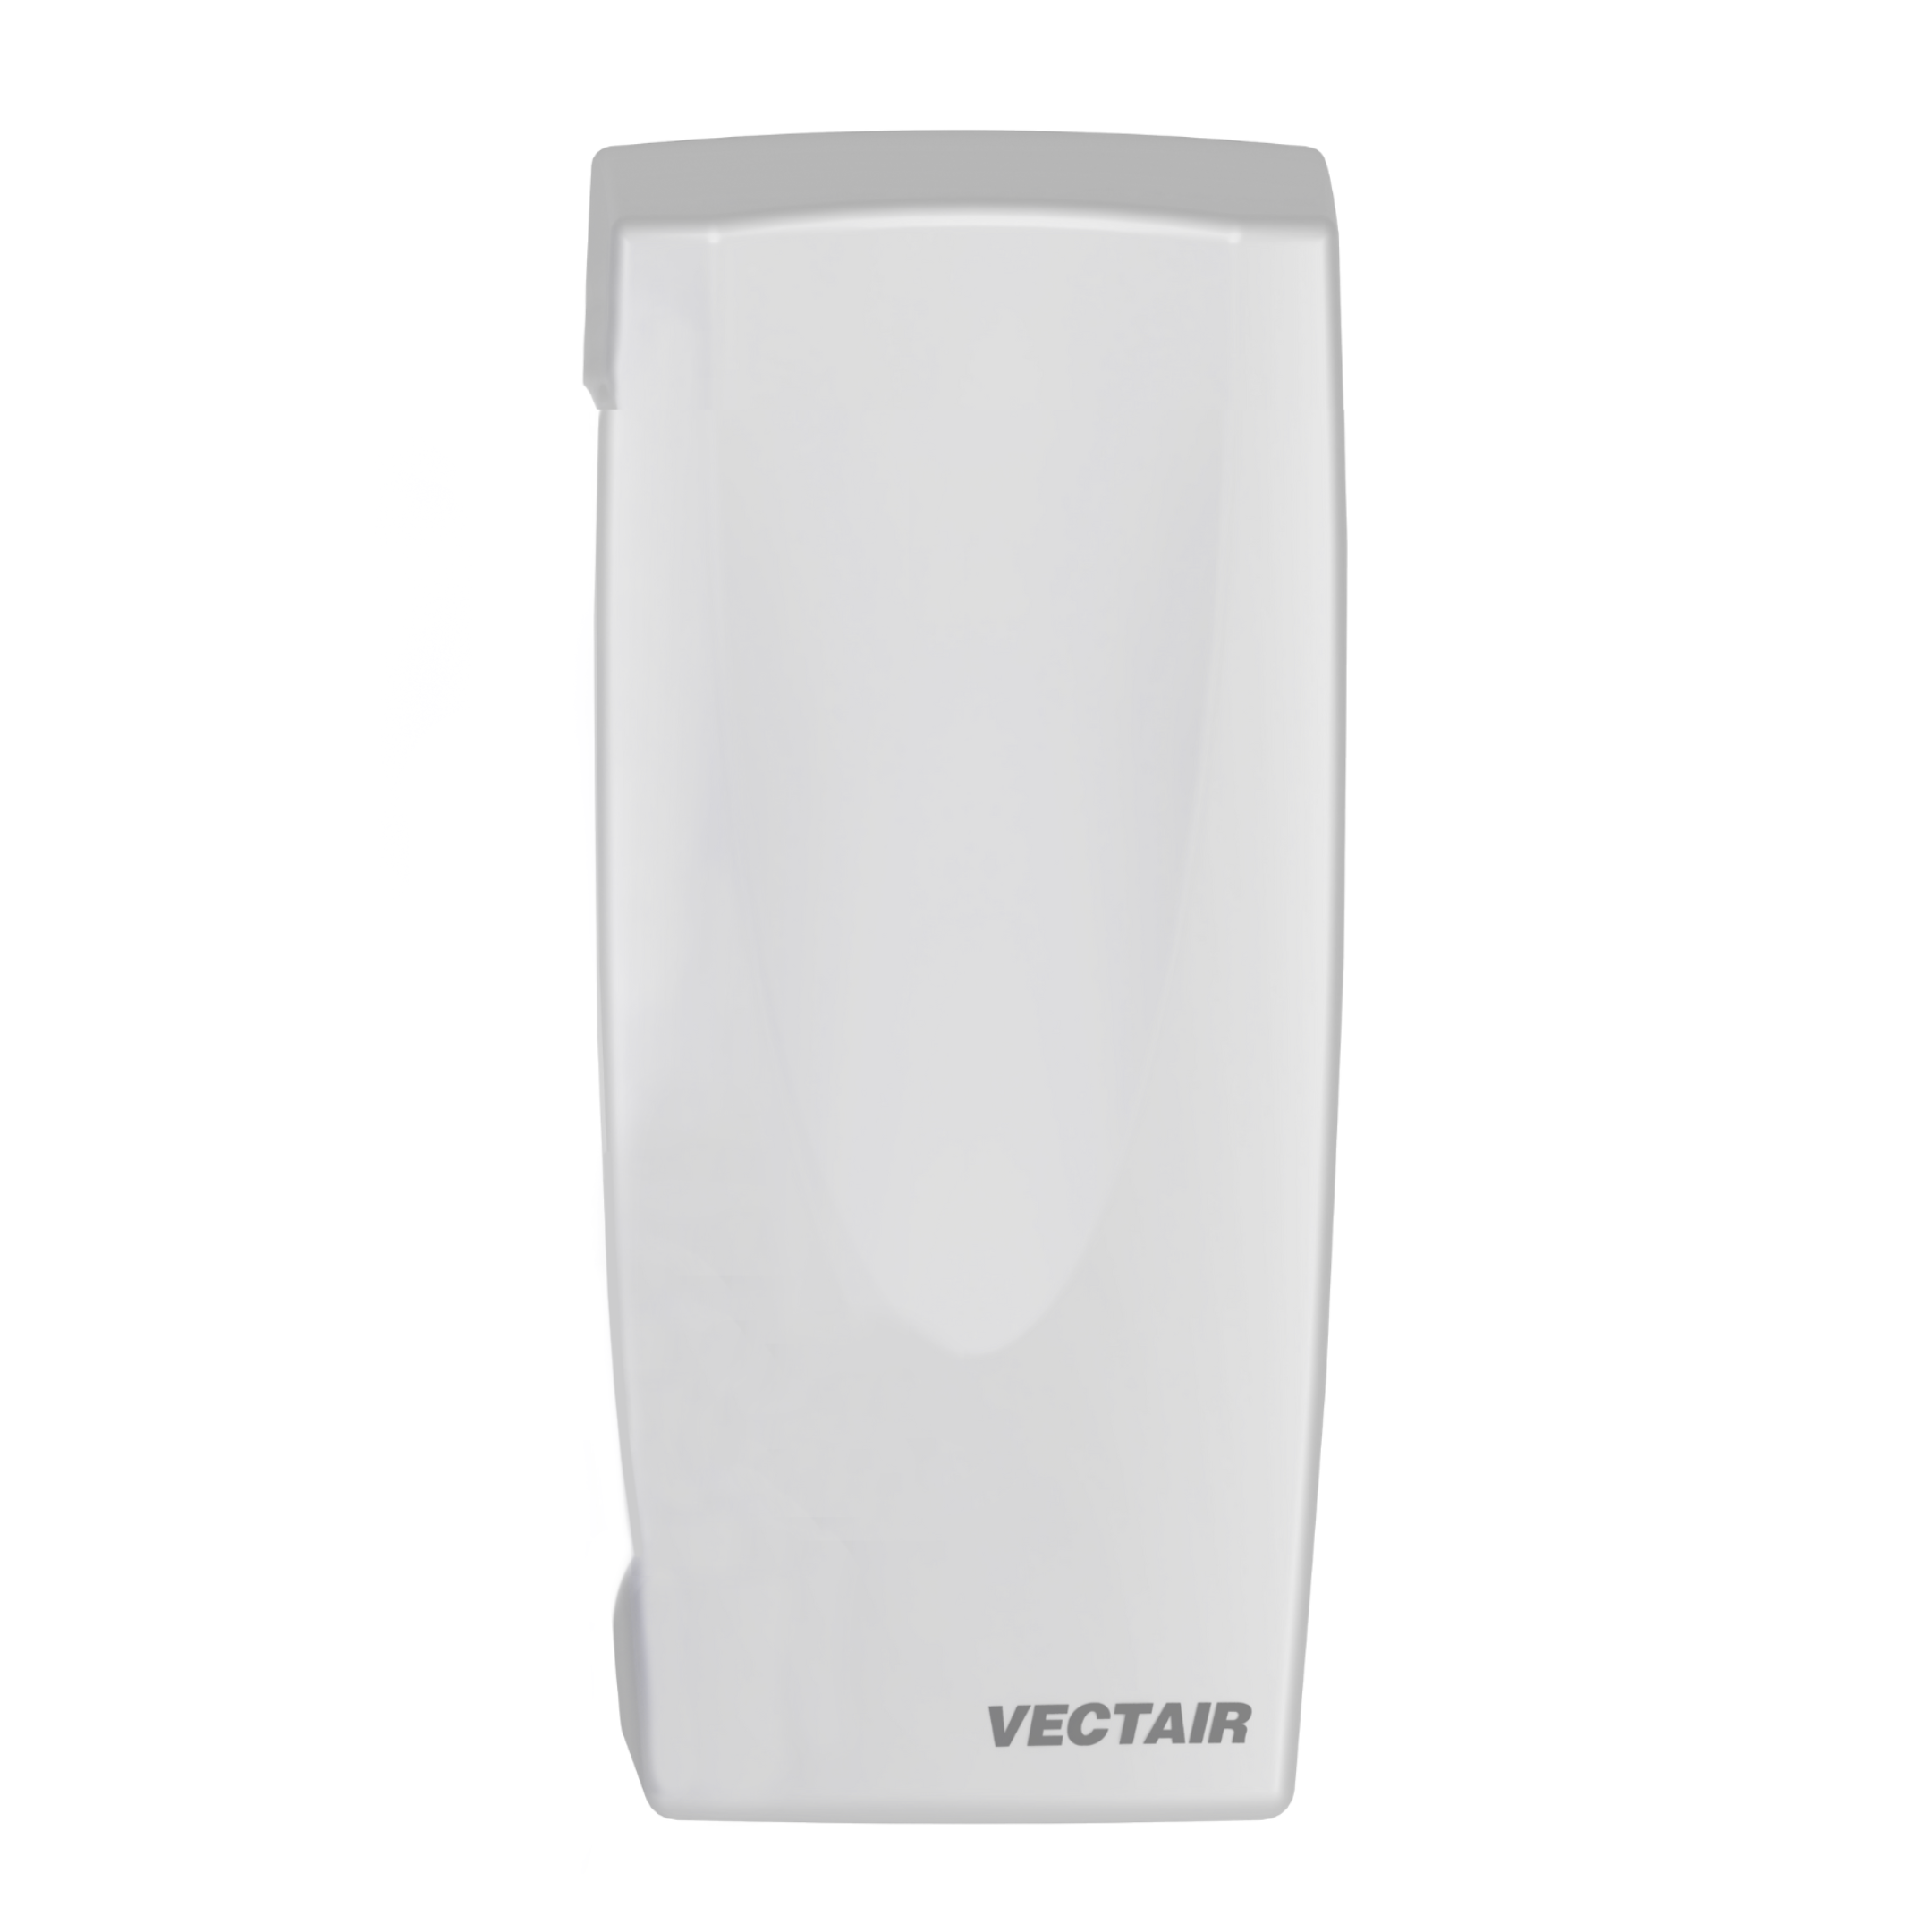 Vectair - Standard Solid Evolution Dispenser